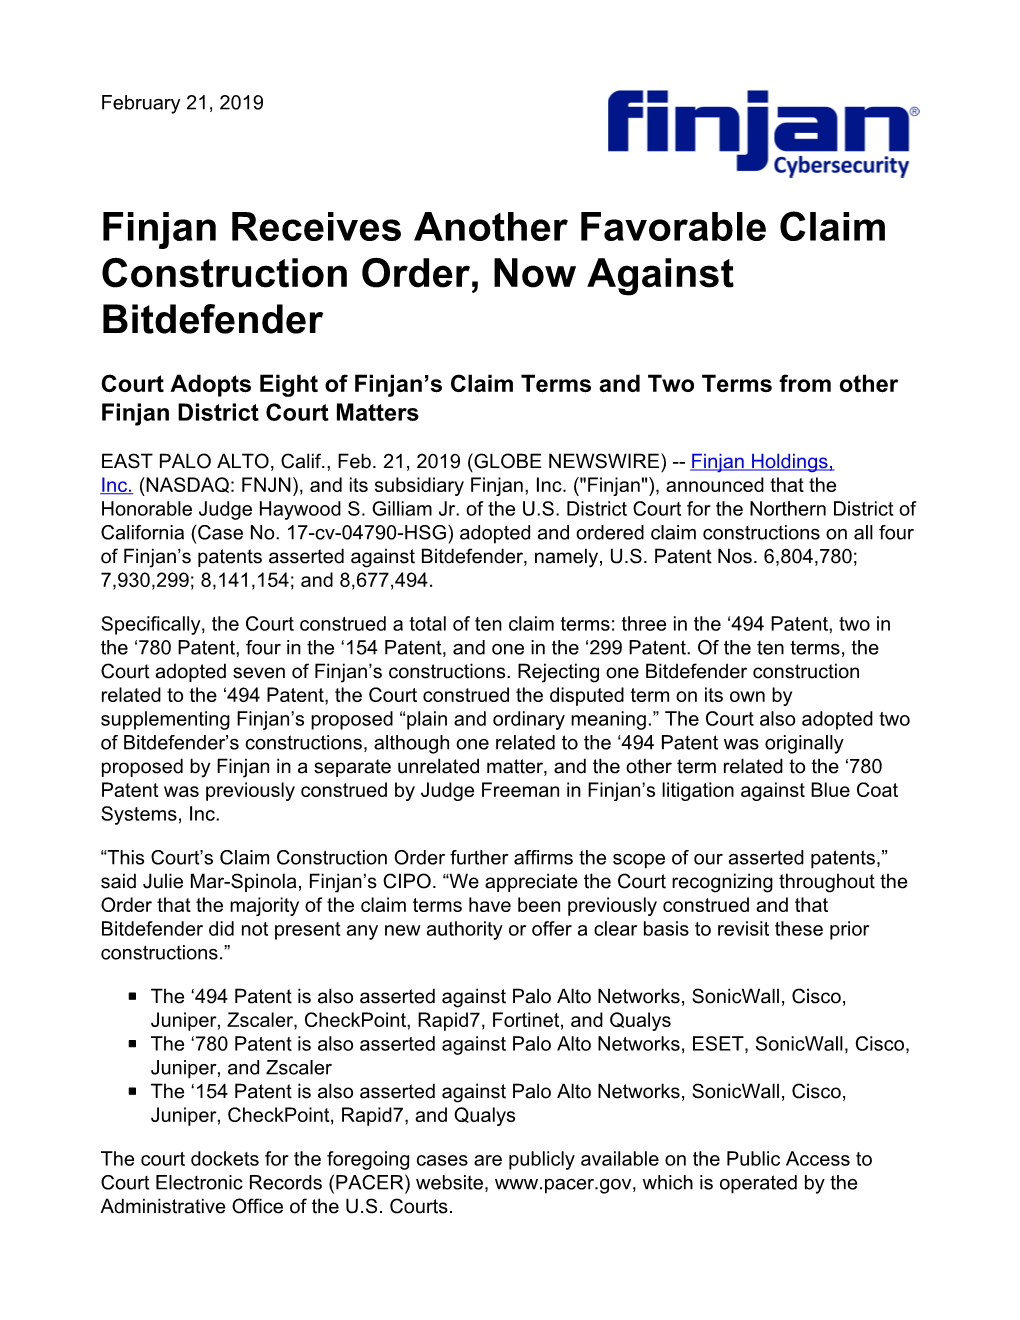 Finjan Receives Another Favorable Claim Construction Order, Now Against Bitdefender